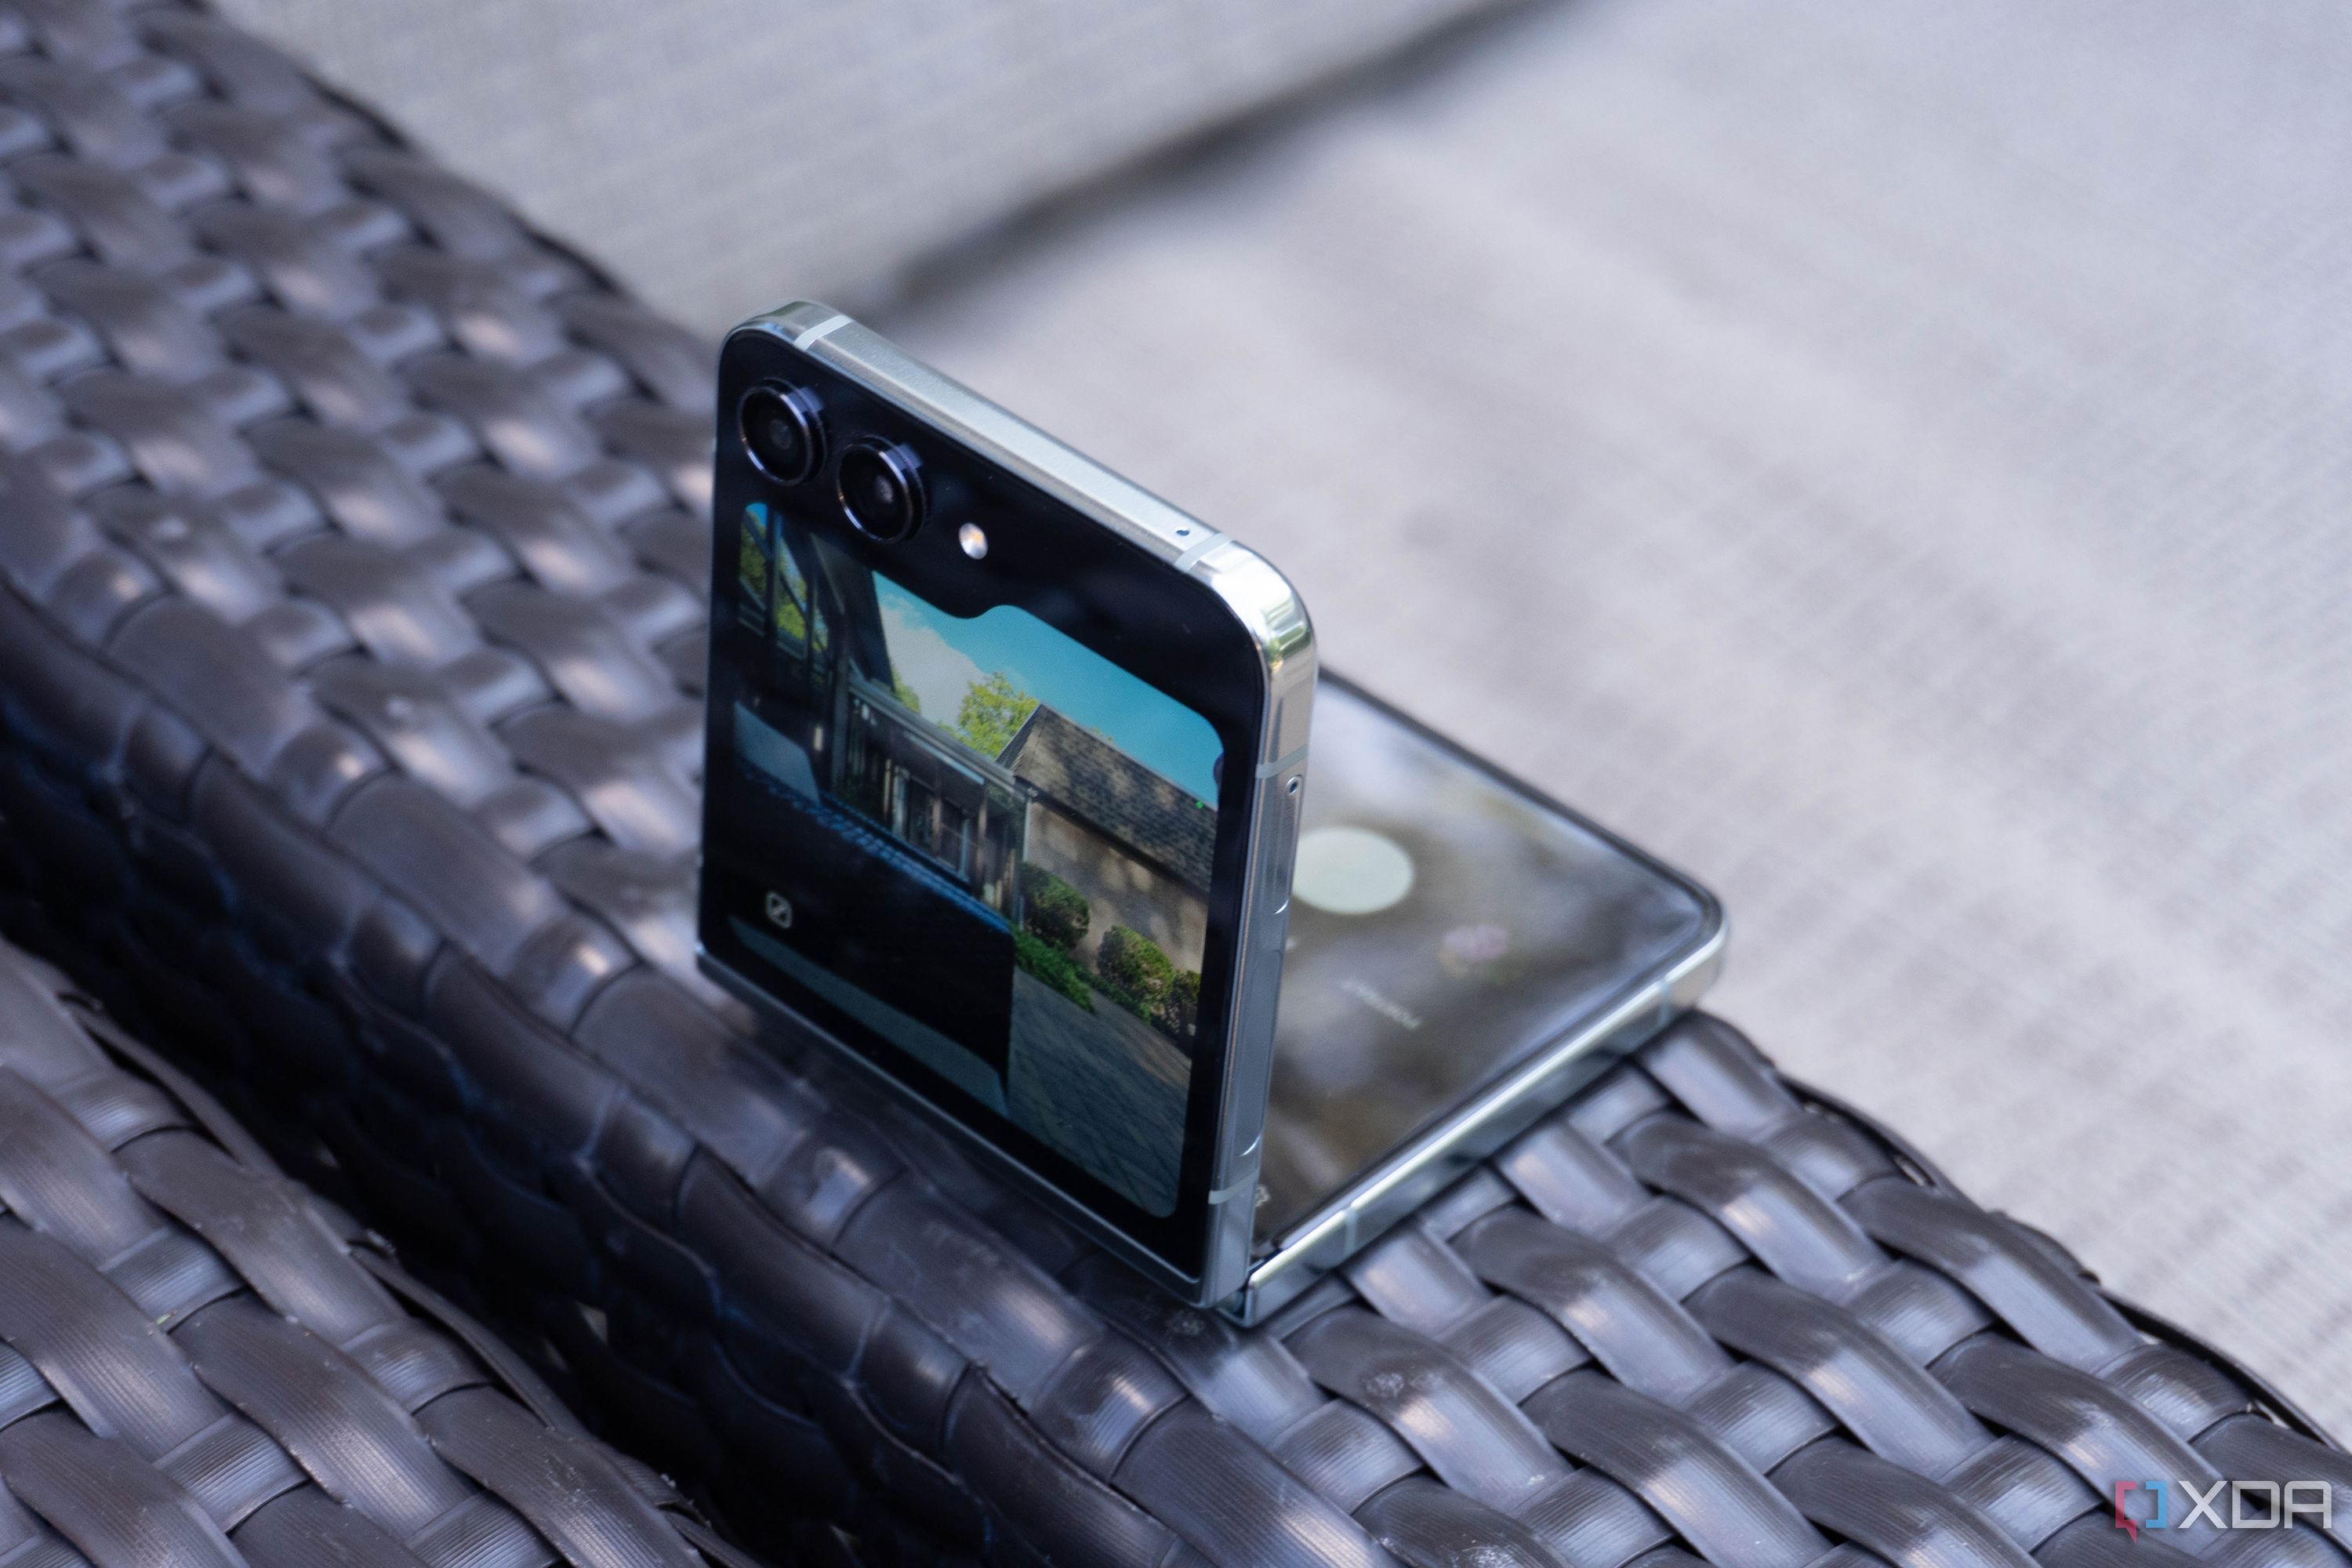 Cute Korean Sun Samsung Phone Case for Samsung Galaxy Z Flip (4G